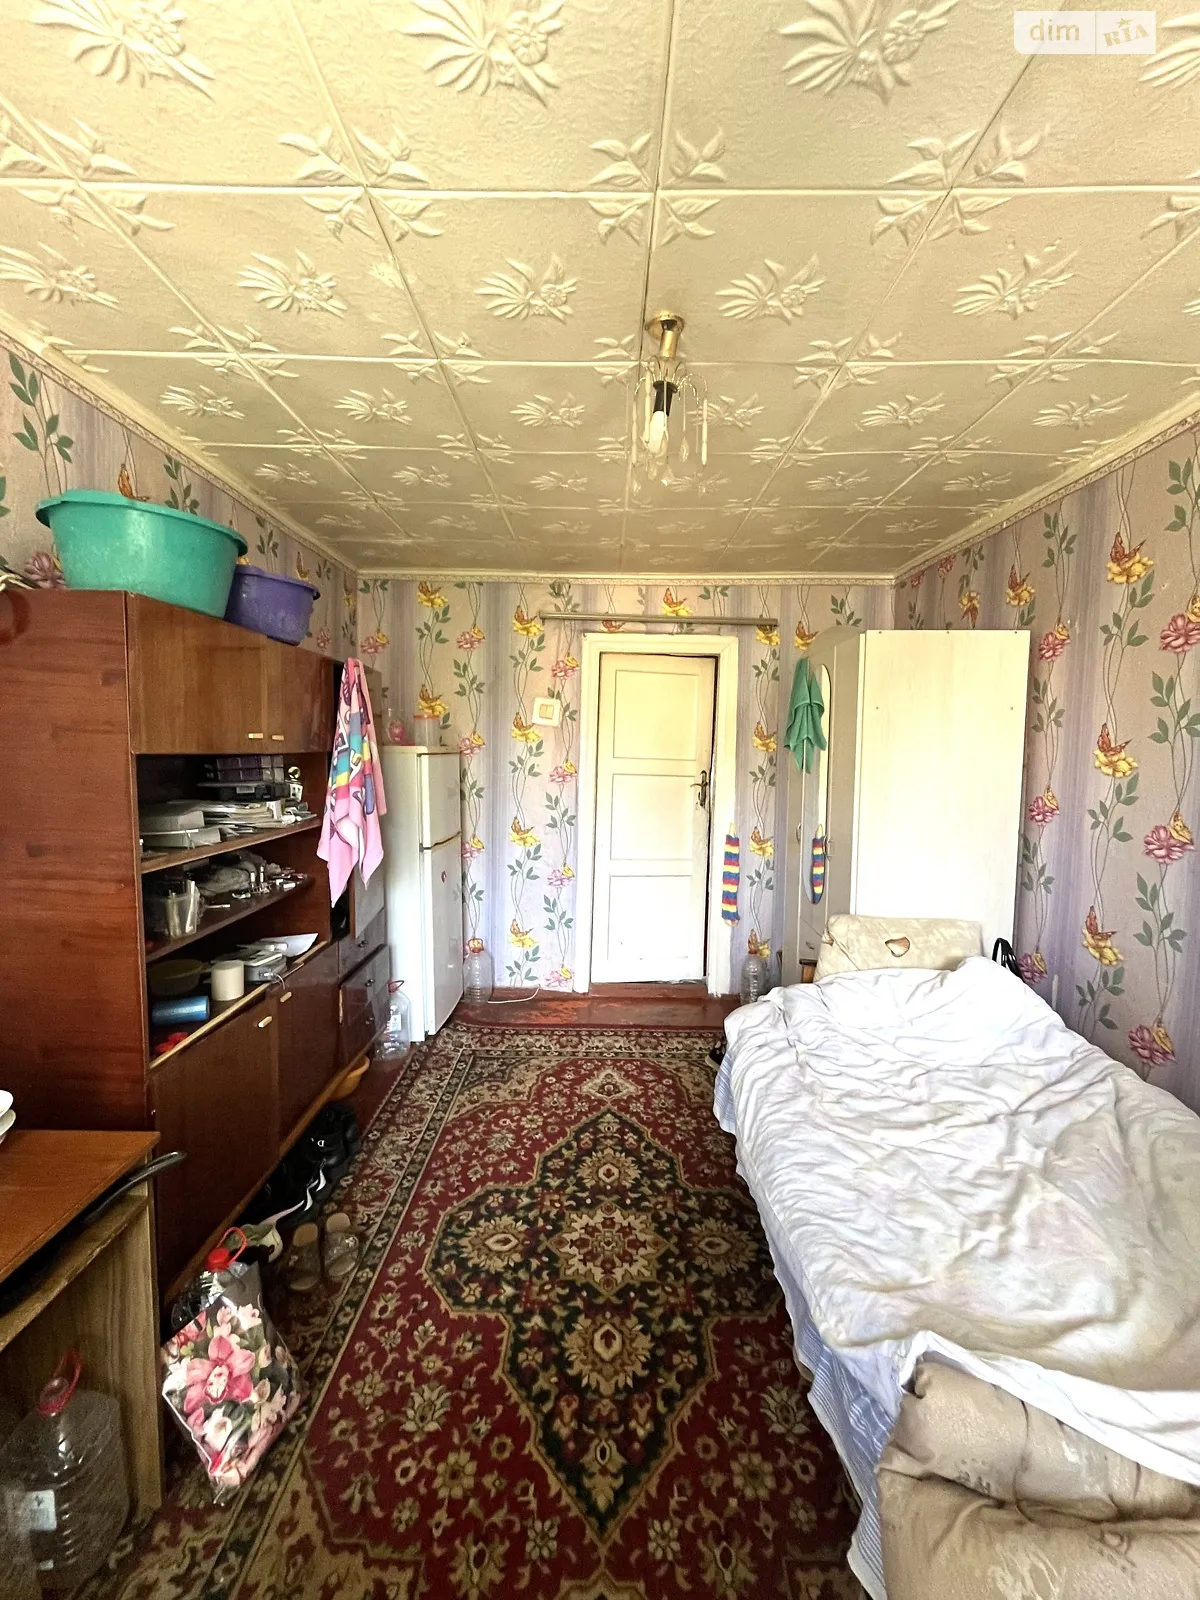 Продается комната 25 кв. м в Николаеве - фото 3